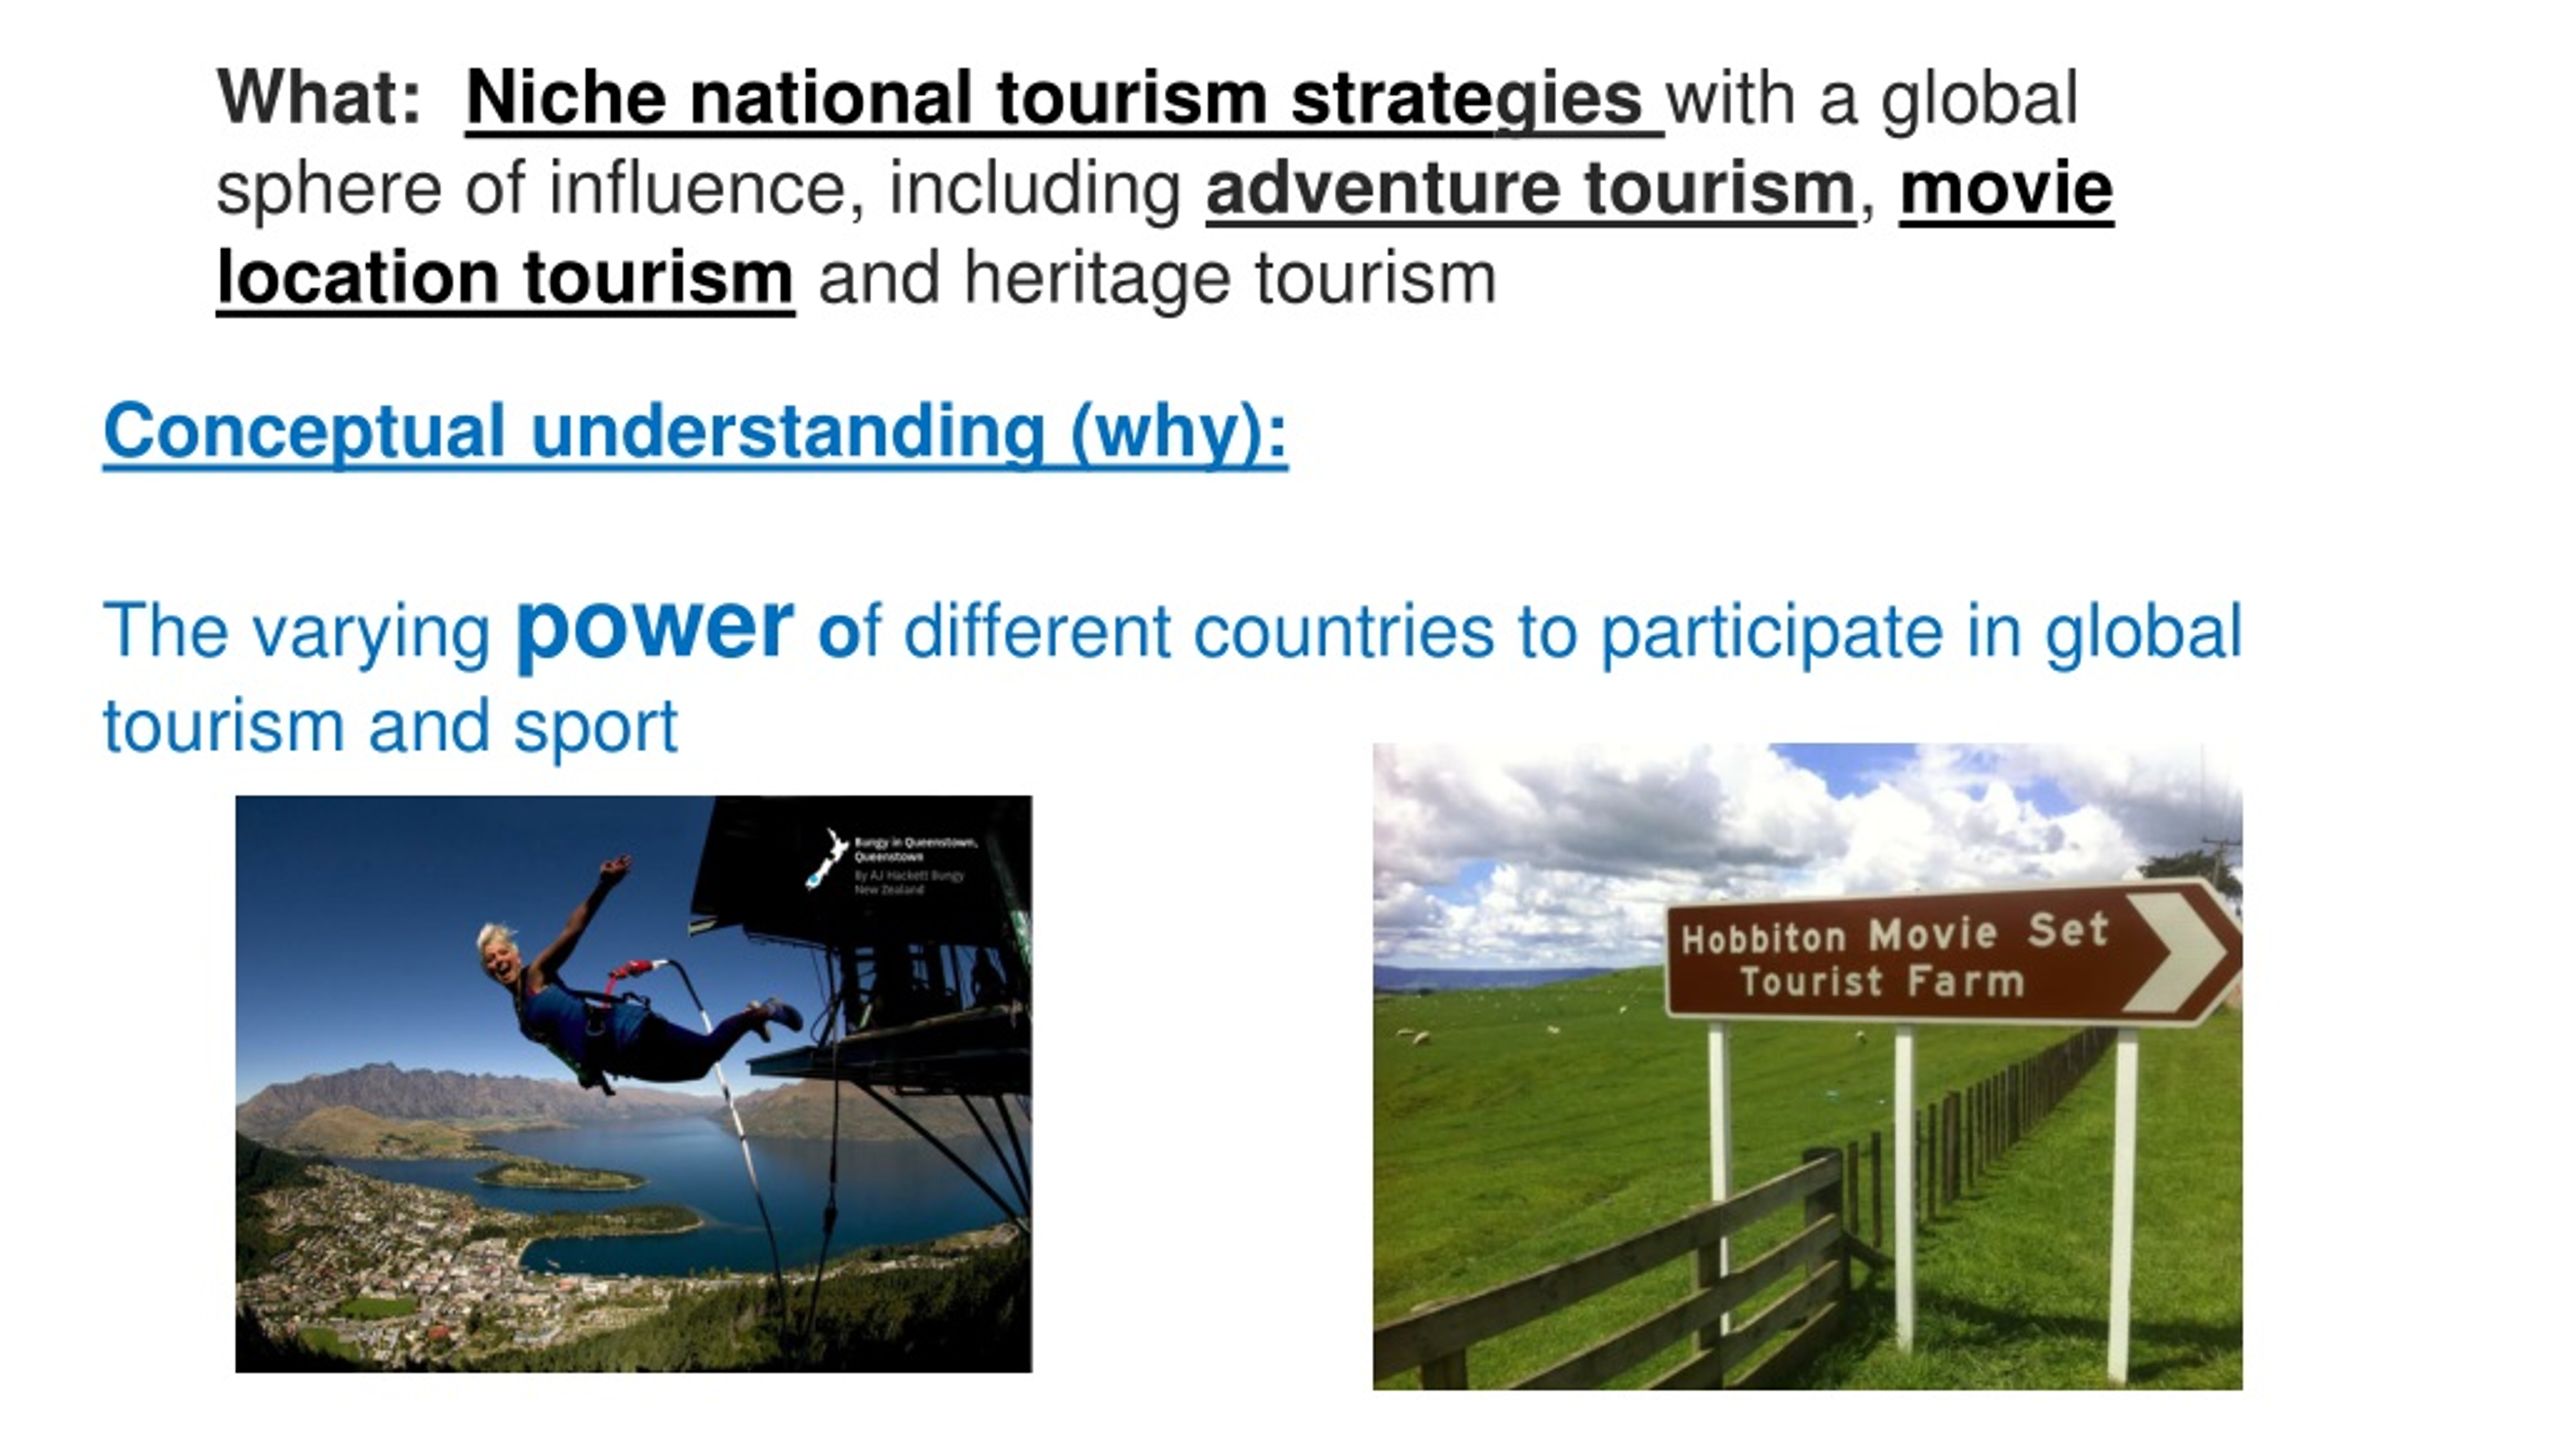 niche tourism definition wikipedia